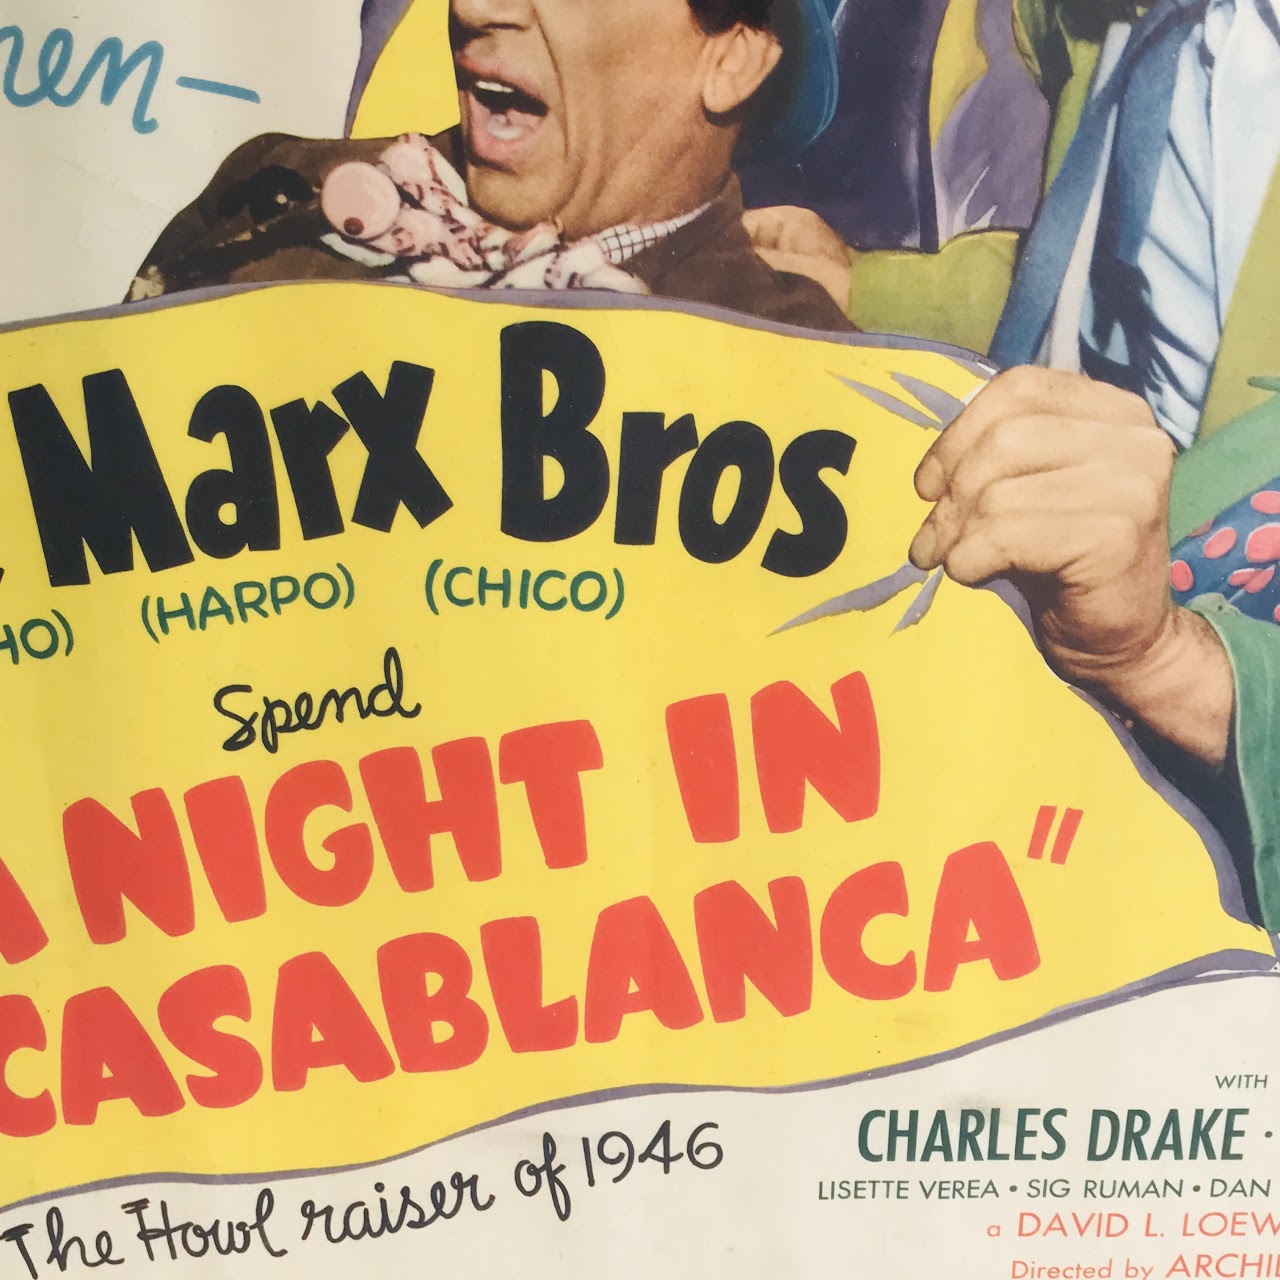 Marx Brothers Original Movie Poster